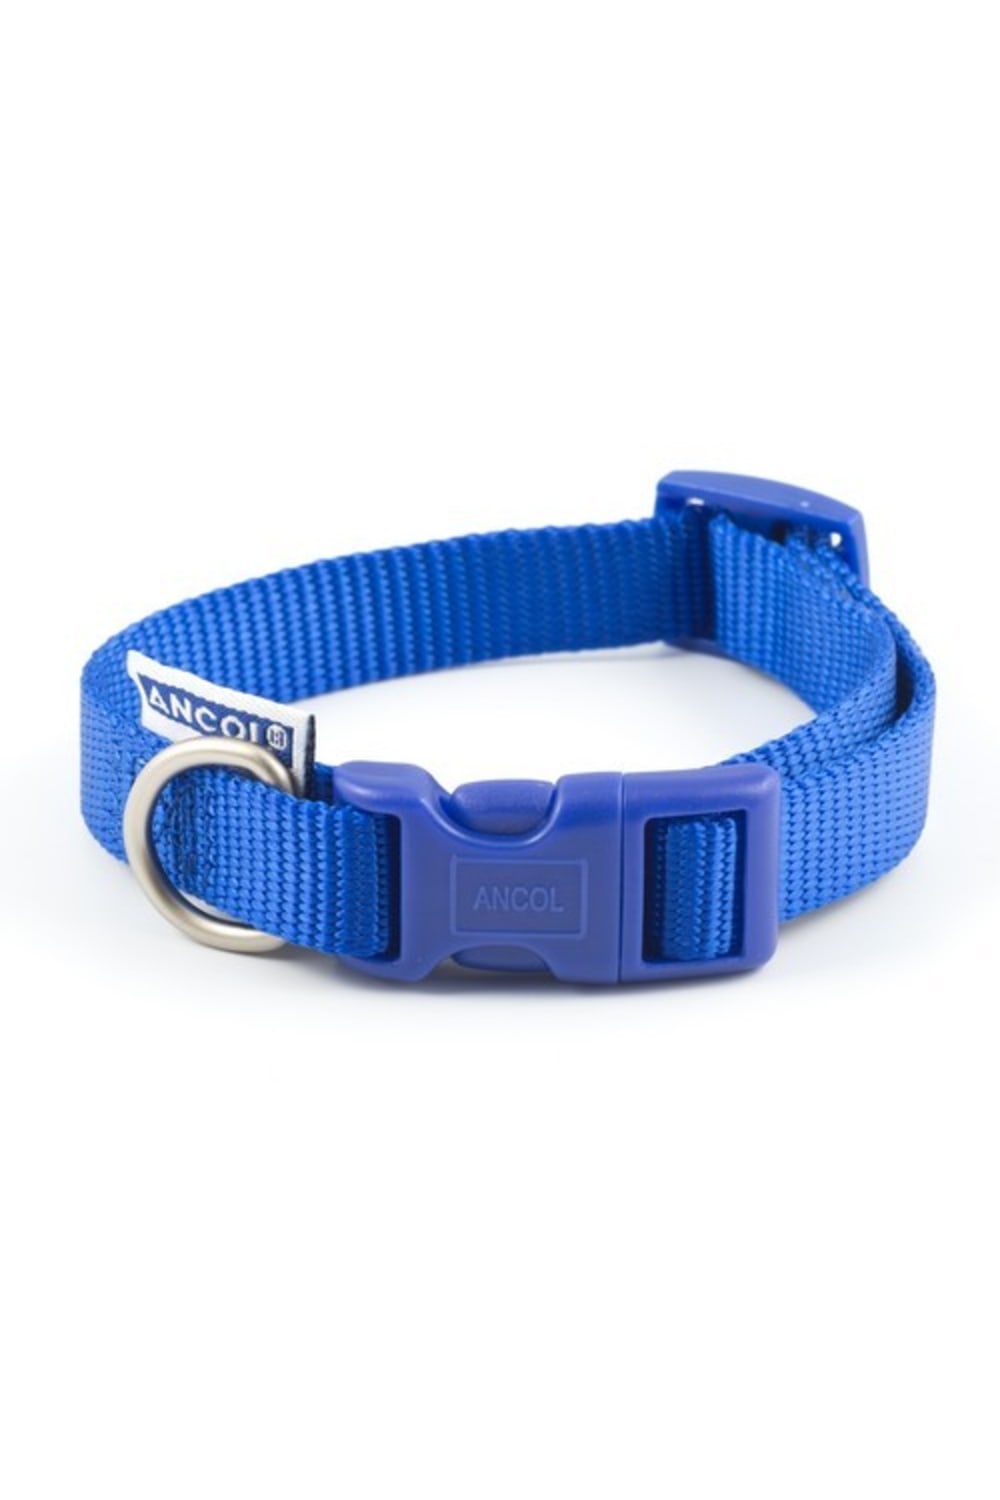 Ancol Nylon Adjustable Collar (Blue) (7.8x11in)